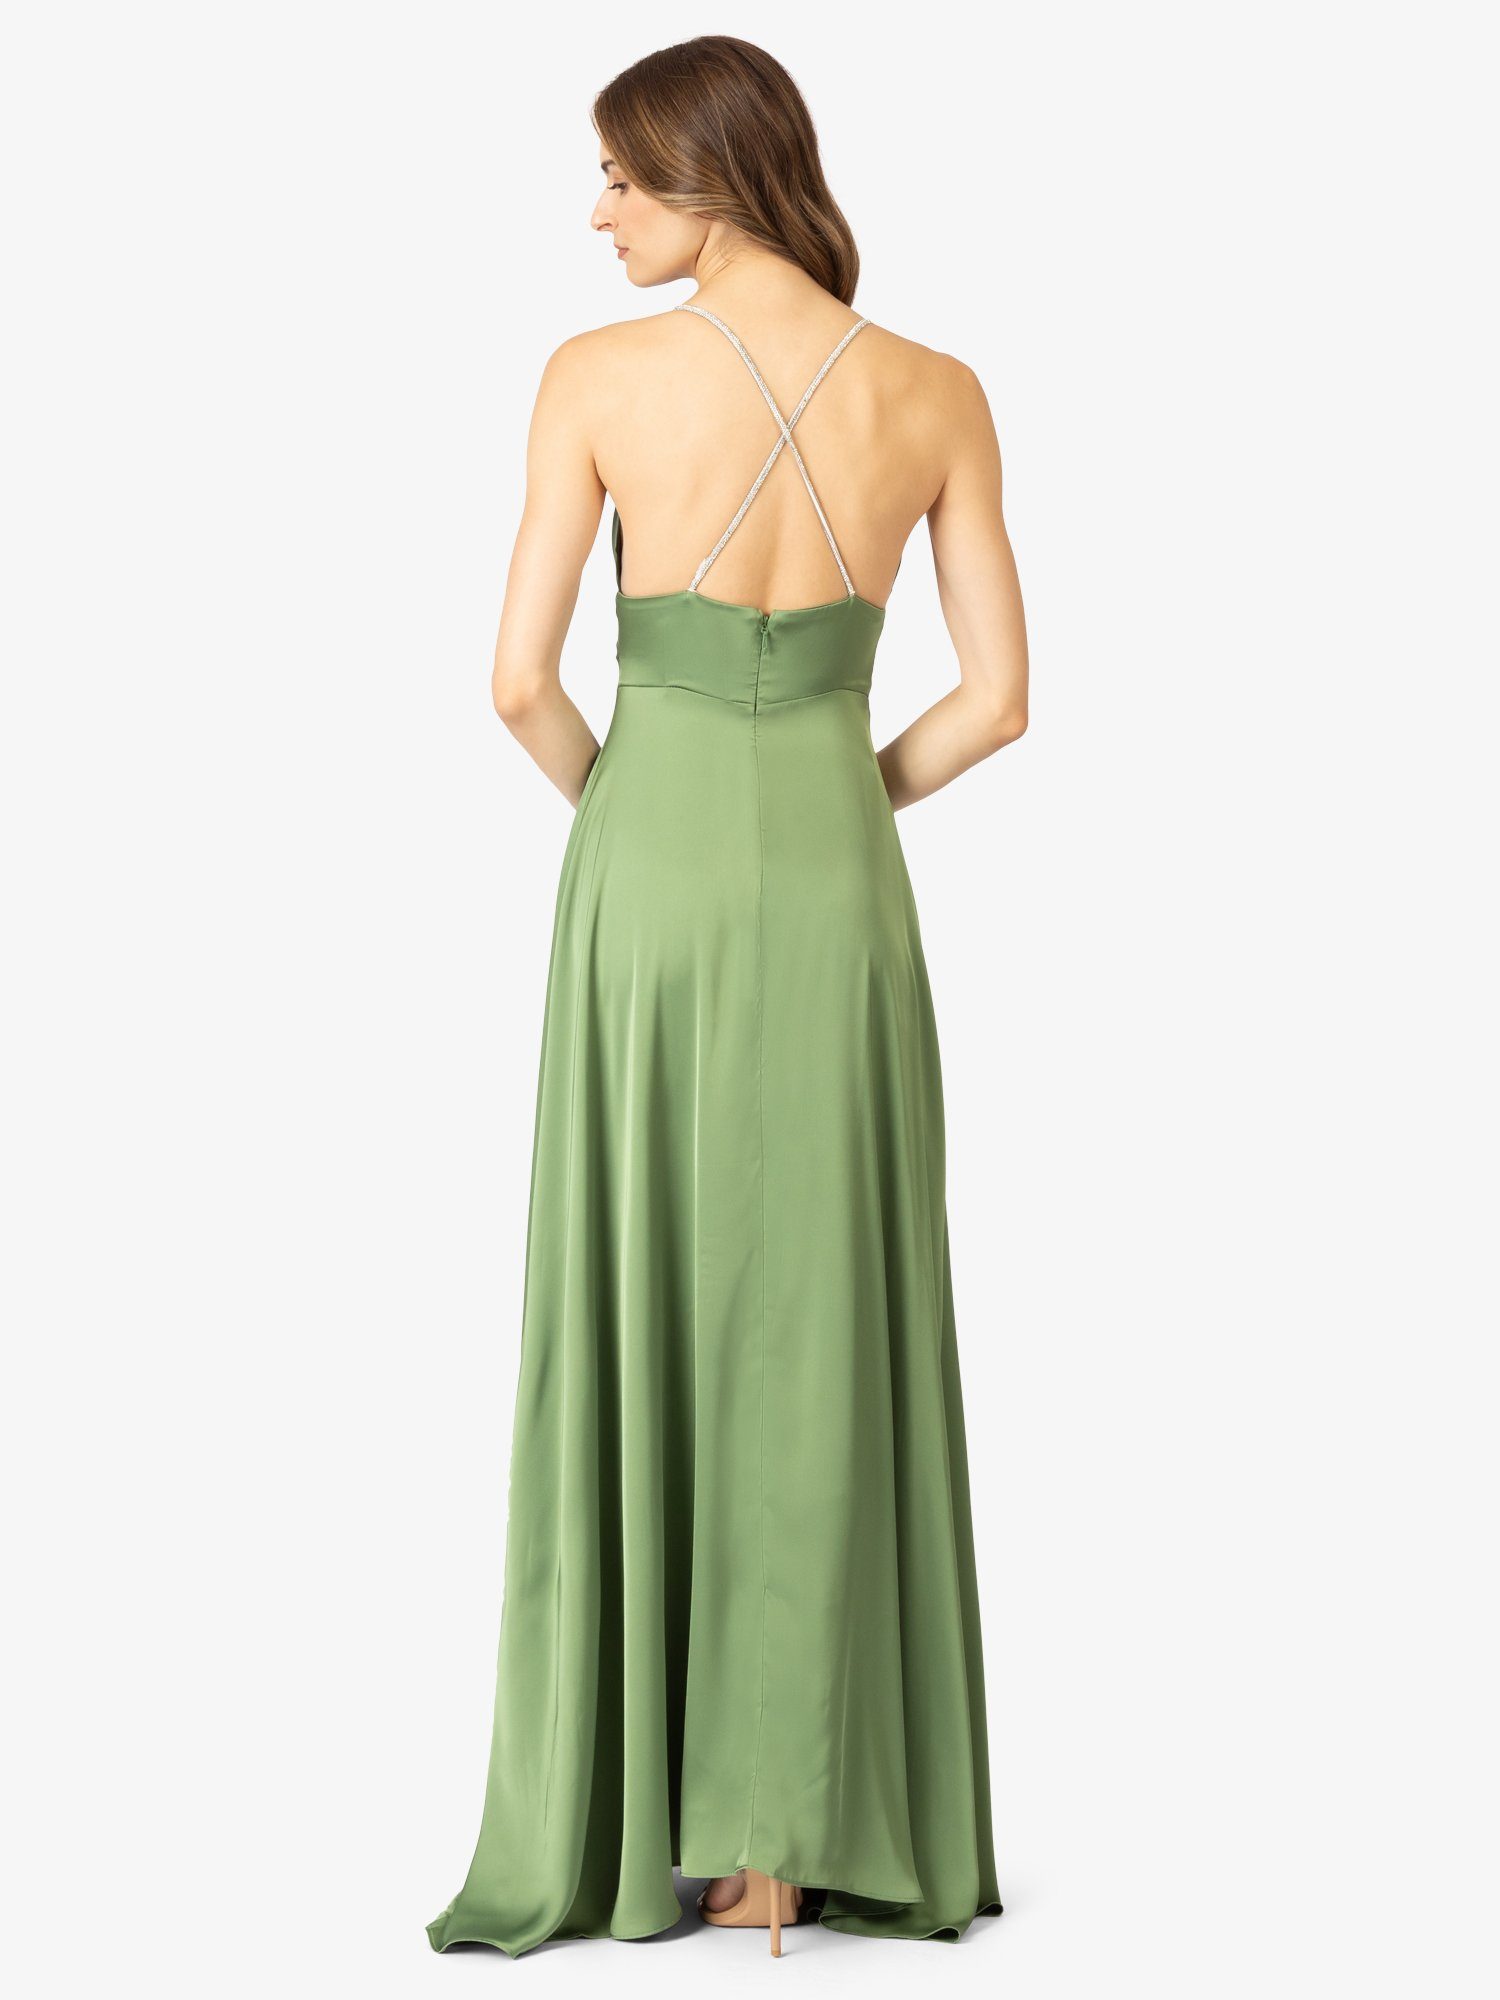 Stil Apart elegantem Abendkleid mit hellgrün